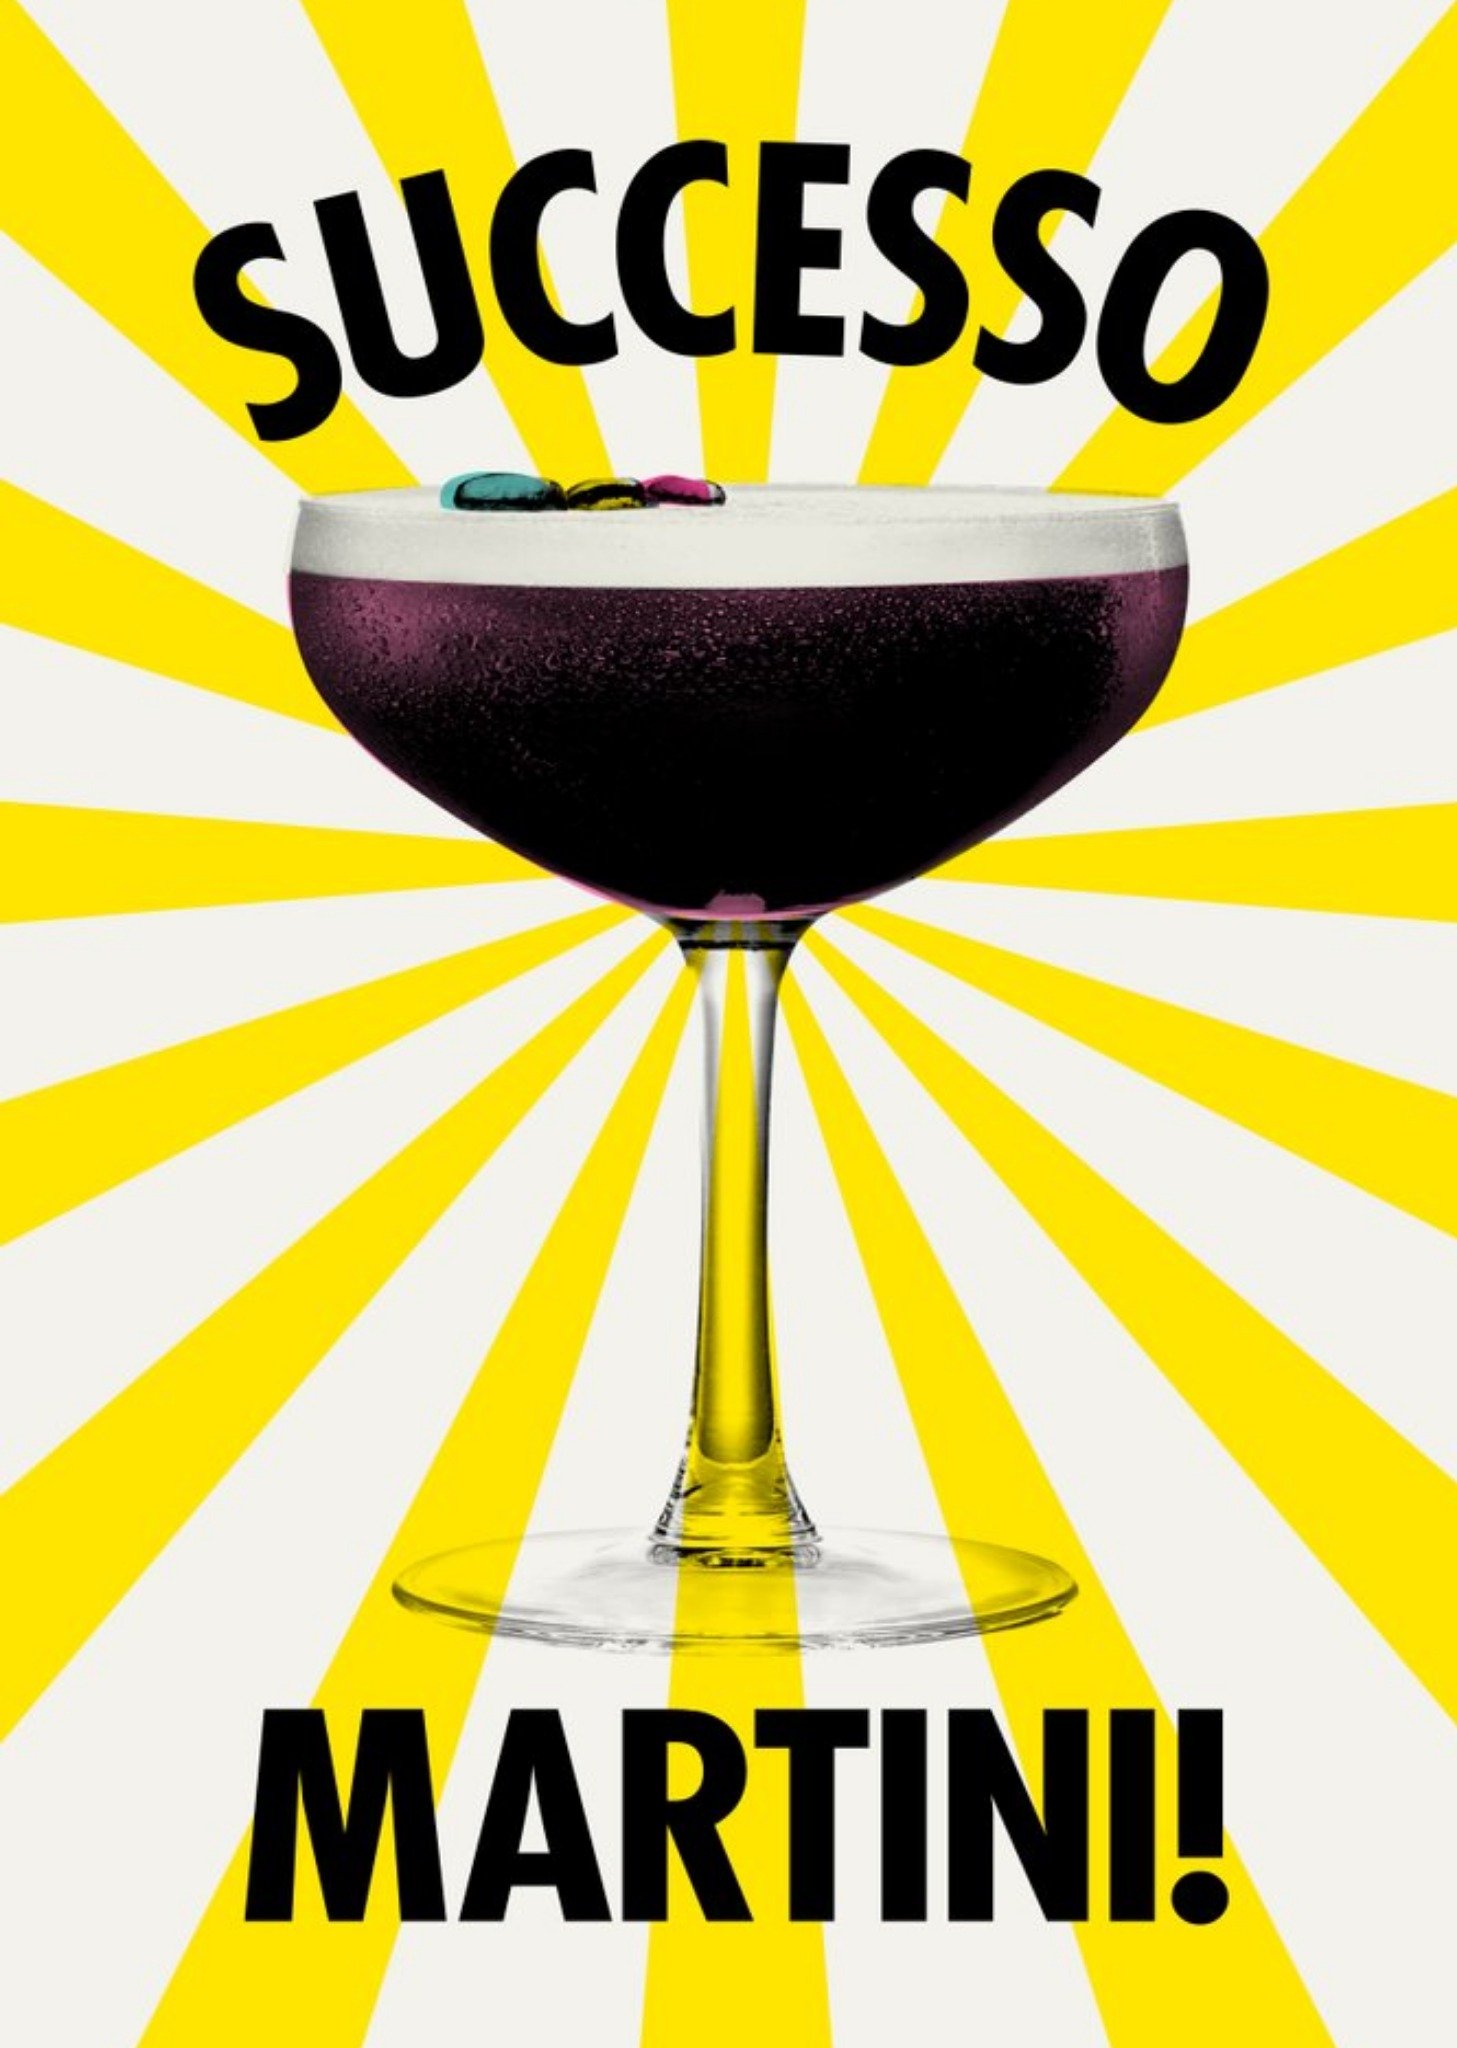 Moonpig Modern Congratulations Successo Martini Card Ecard